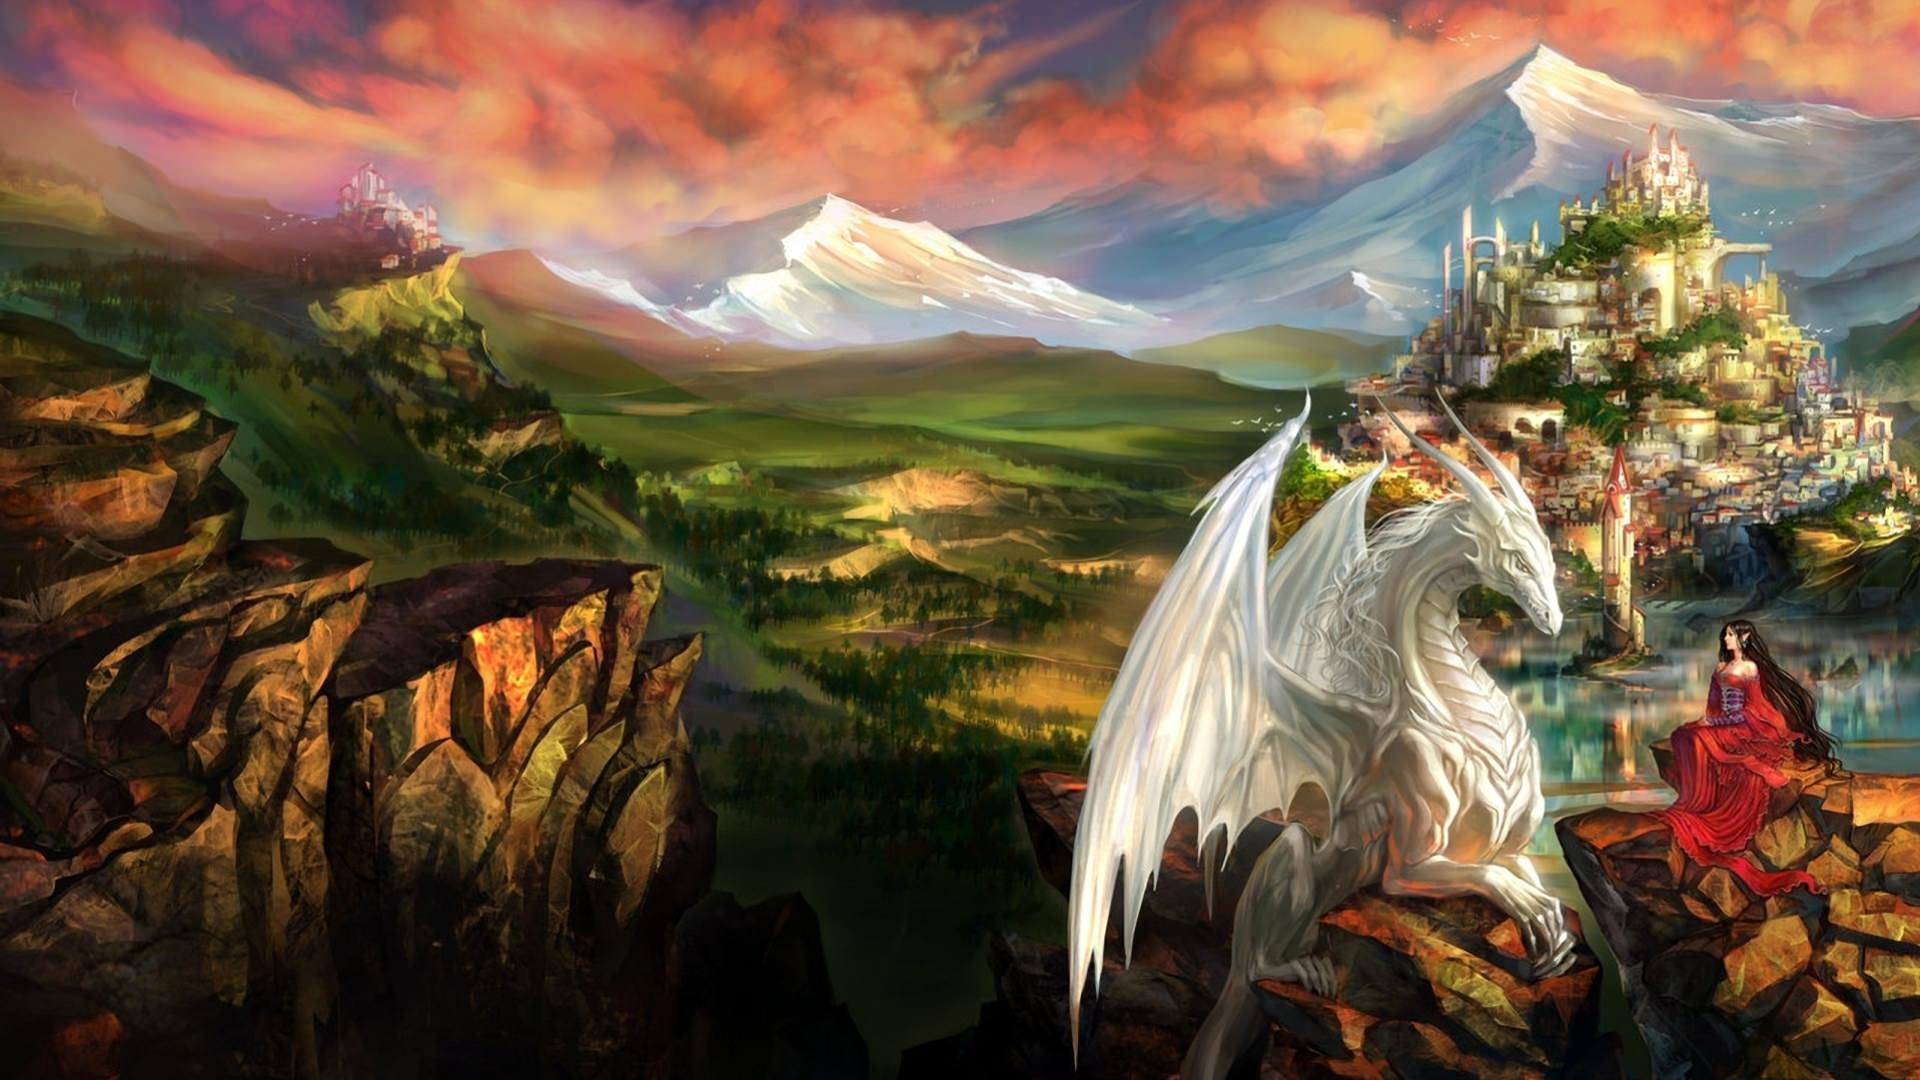 princess mountain landscape with dragon wallpaper